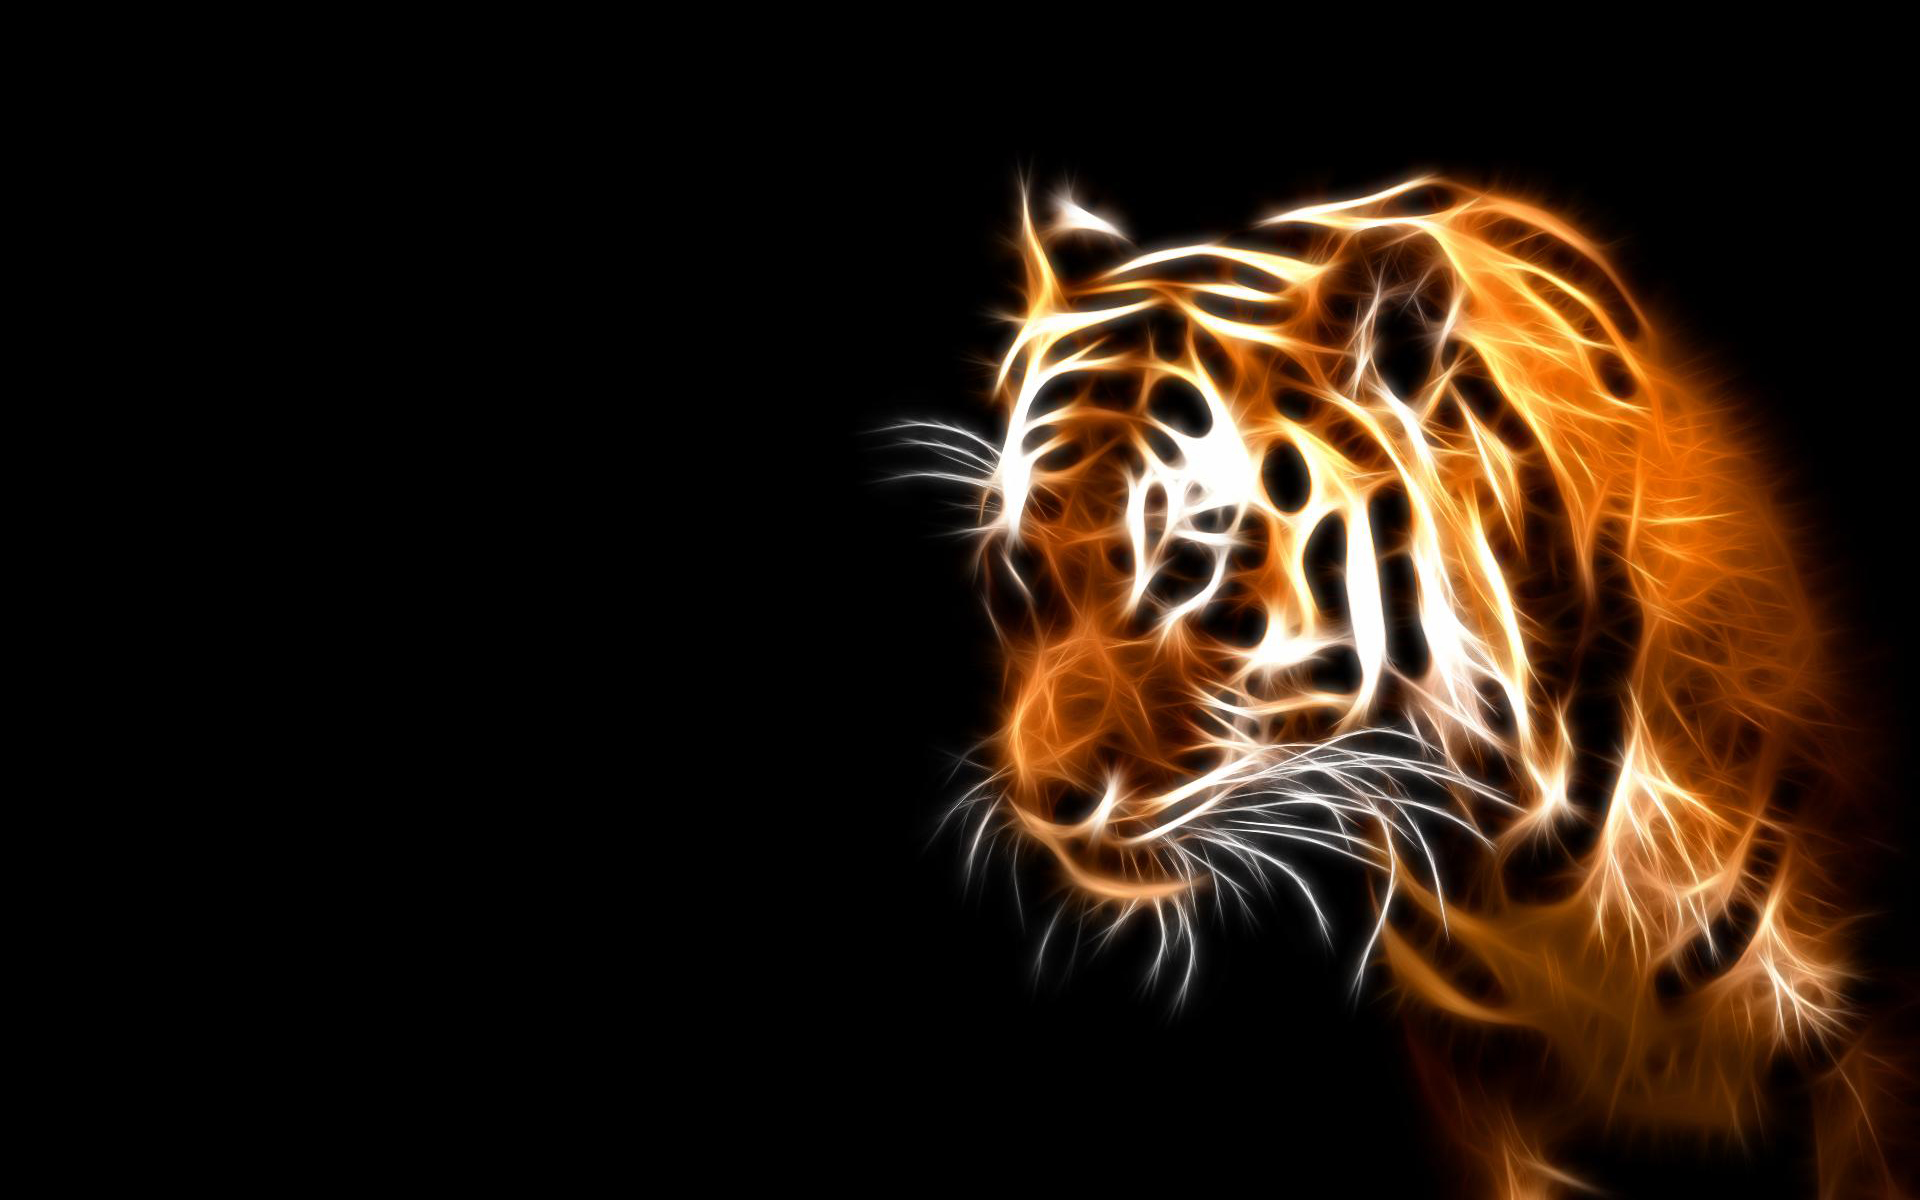 Tiger in HD desktop wallpaper.